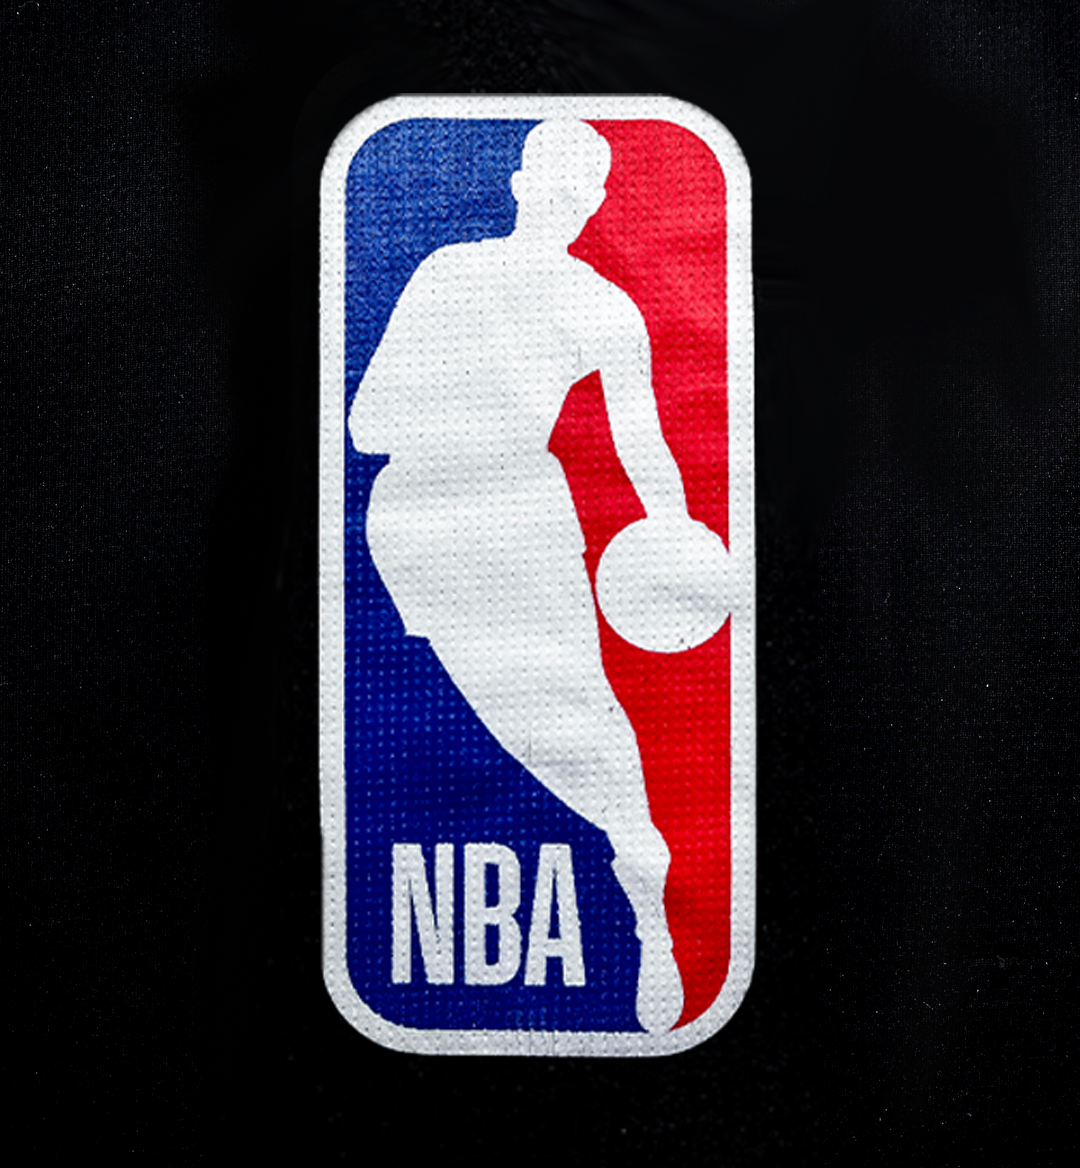 Nba Logo Wallpaper Full HD kxm  Basketball wallpaper Nba coaches Nba  logo